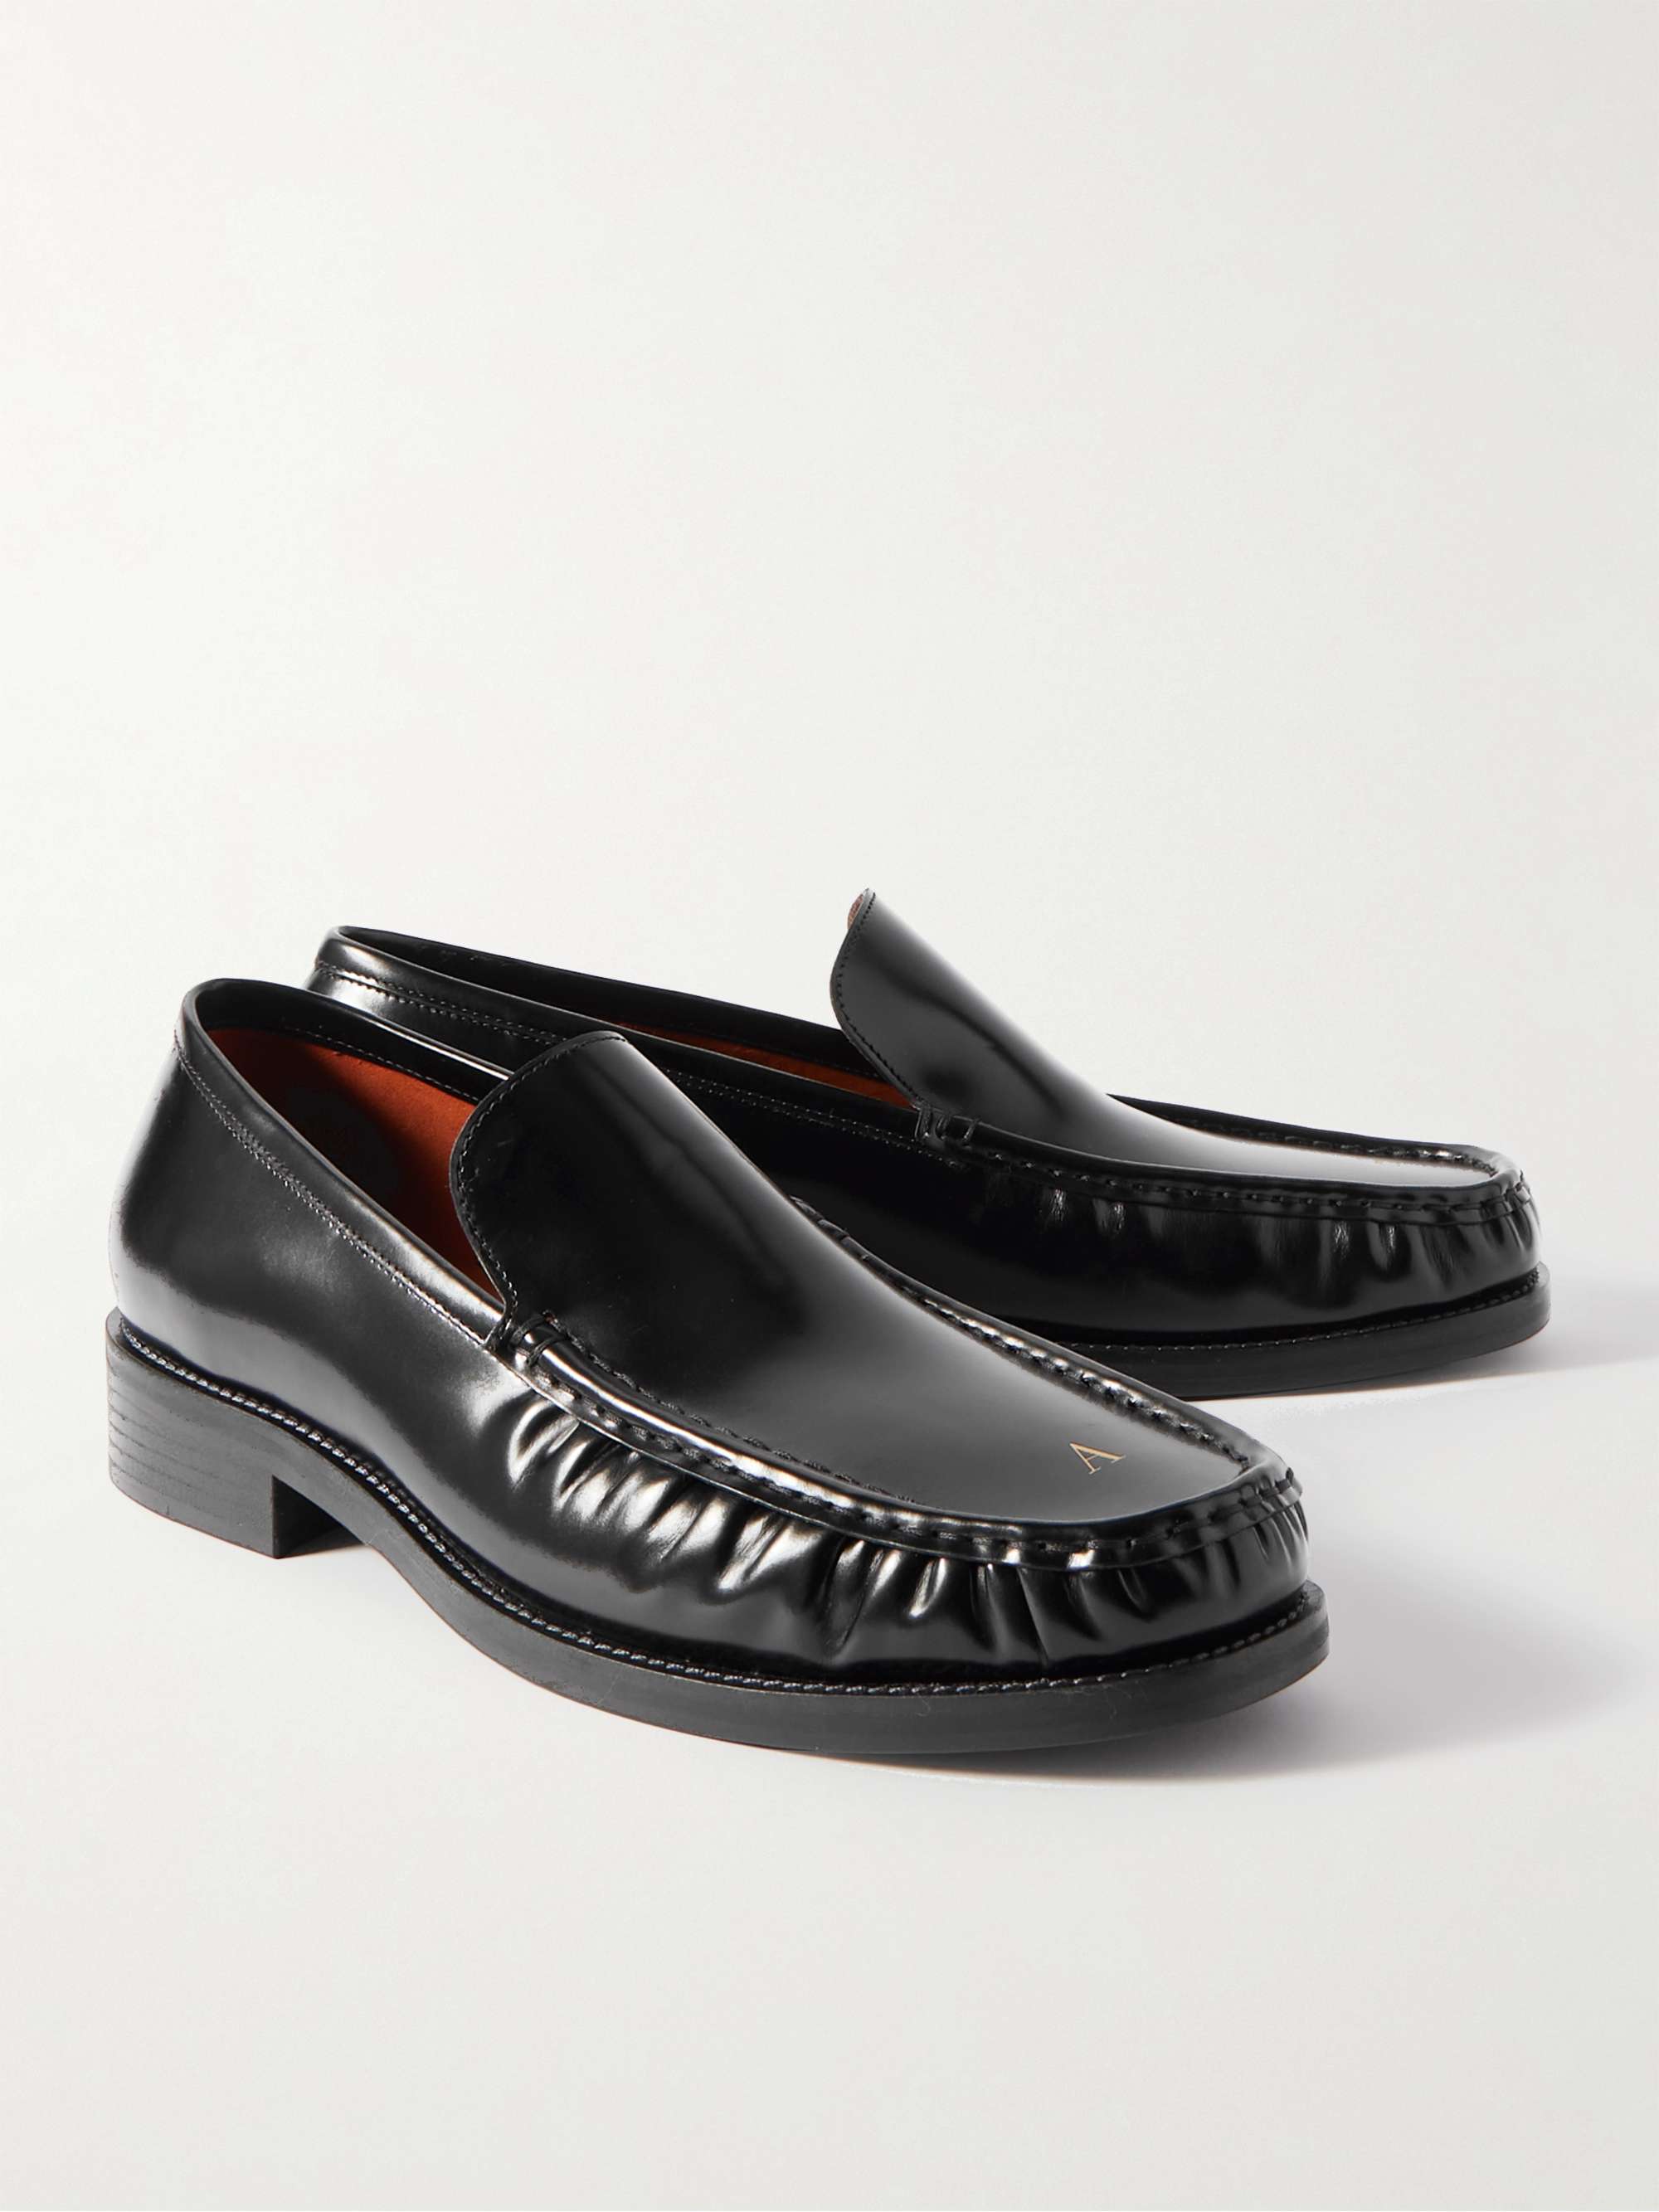 ACNE STUDIOS Leather Loafers for Men | MR PORTER